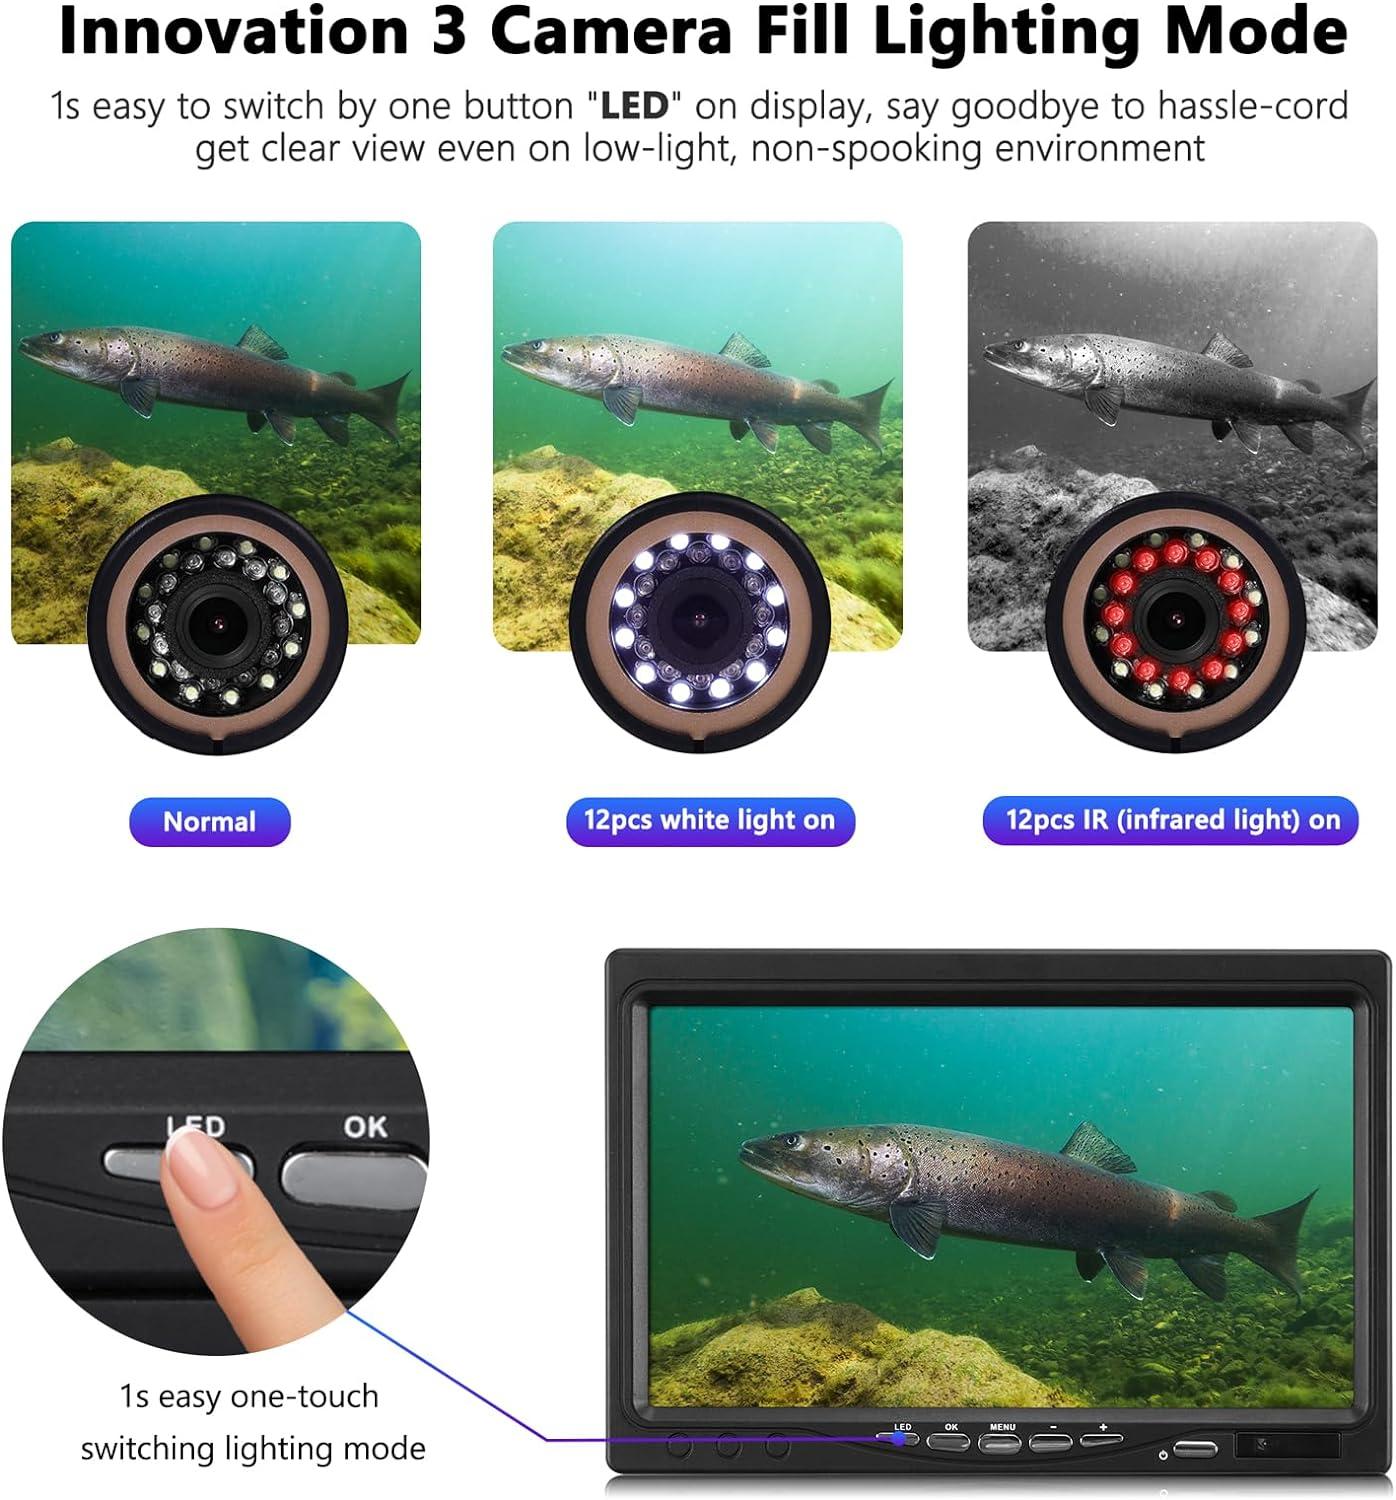 MOOCOR Underwater Fishing Camera Upgraded 720P Camera w/DVR